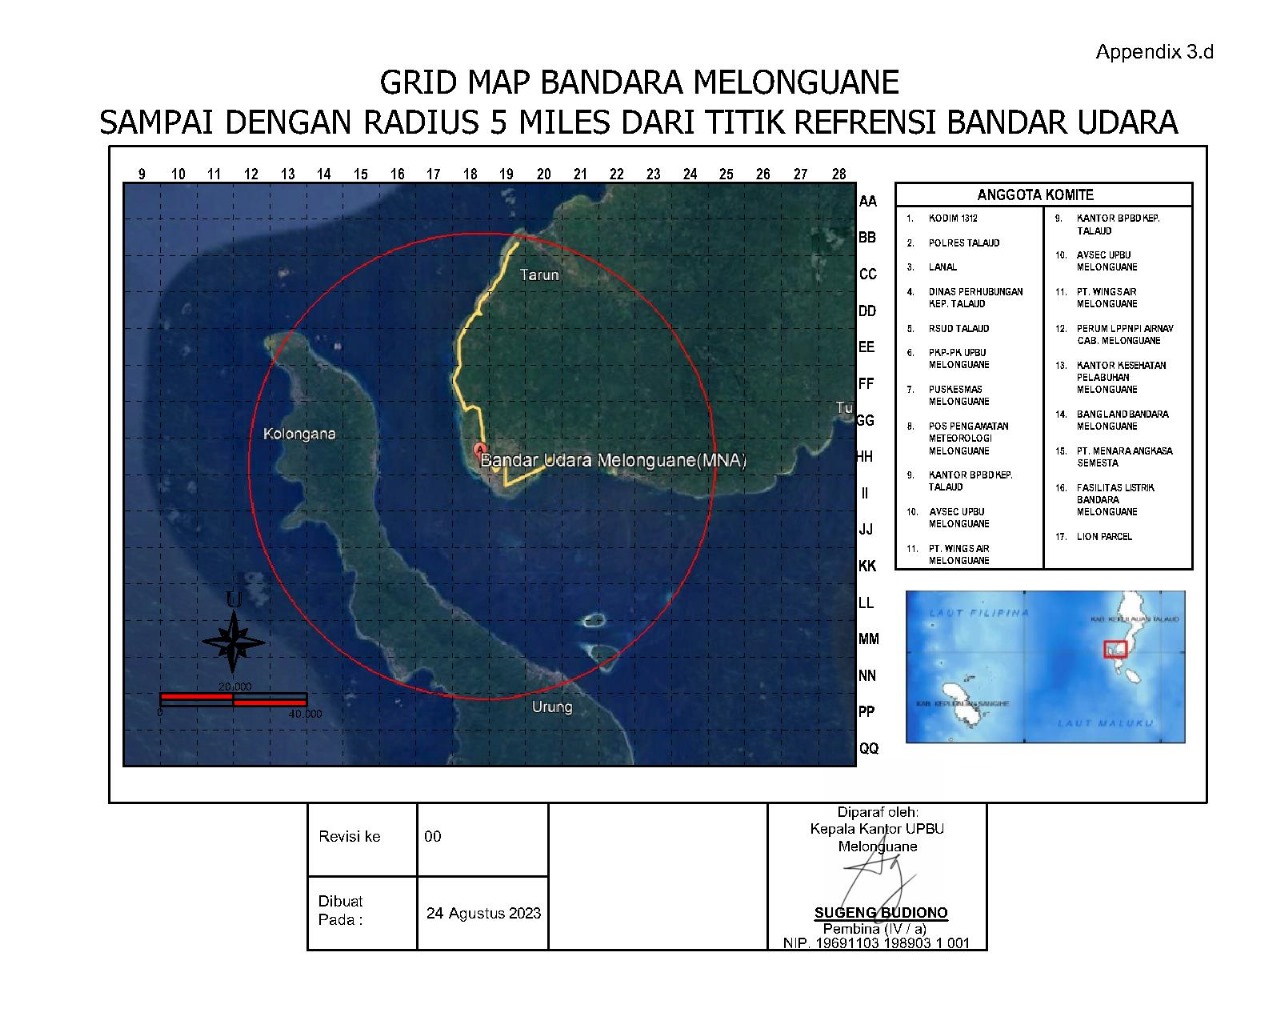 Gambar Peta Bandara Grid Map 5 Miles (2)_Bandara Melonguane